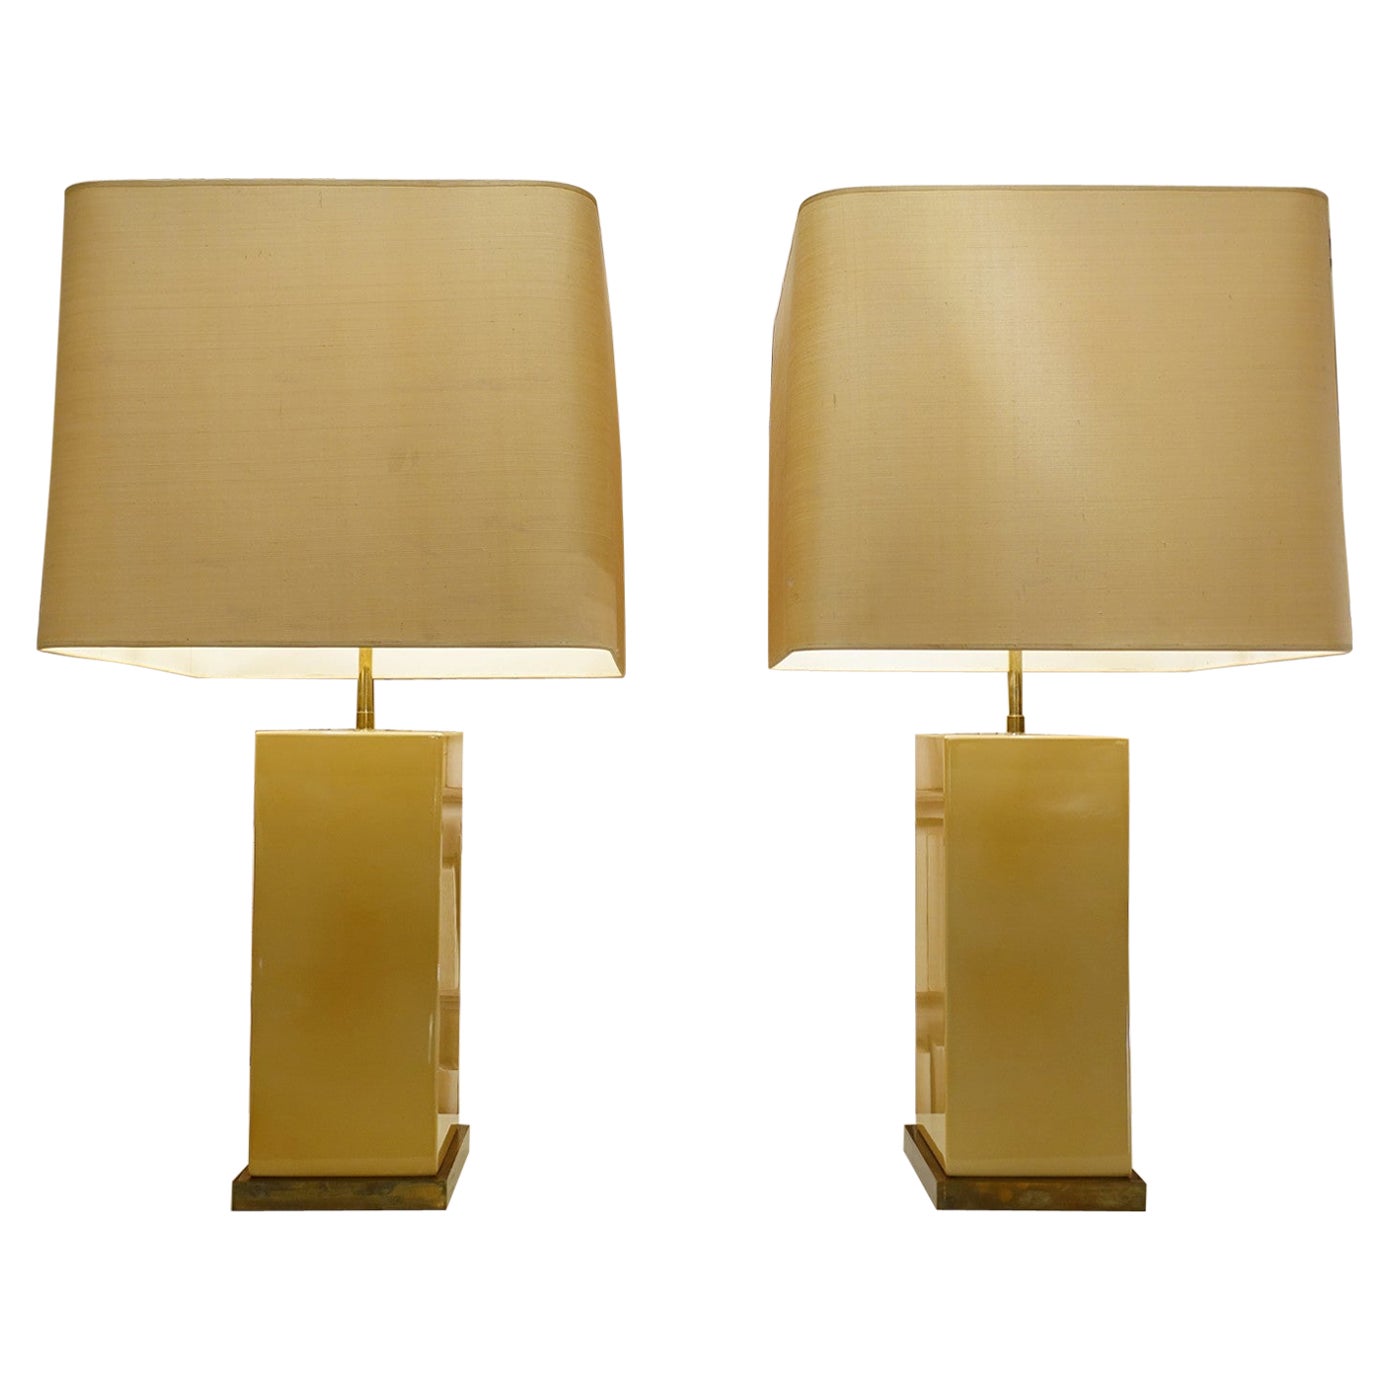 Roger Vanhevel Cream Lacquered Wood Table Lamps, Belgium